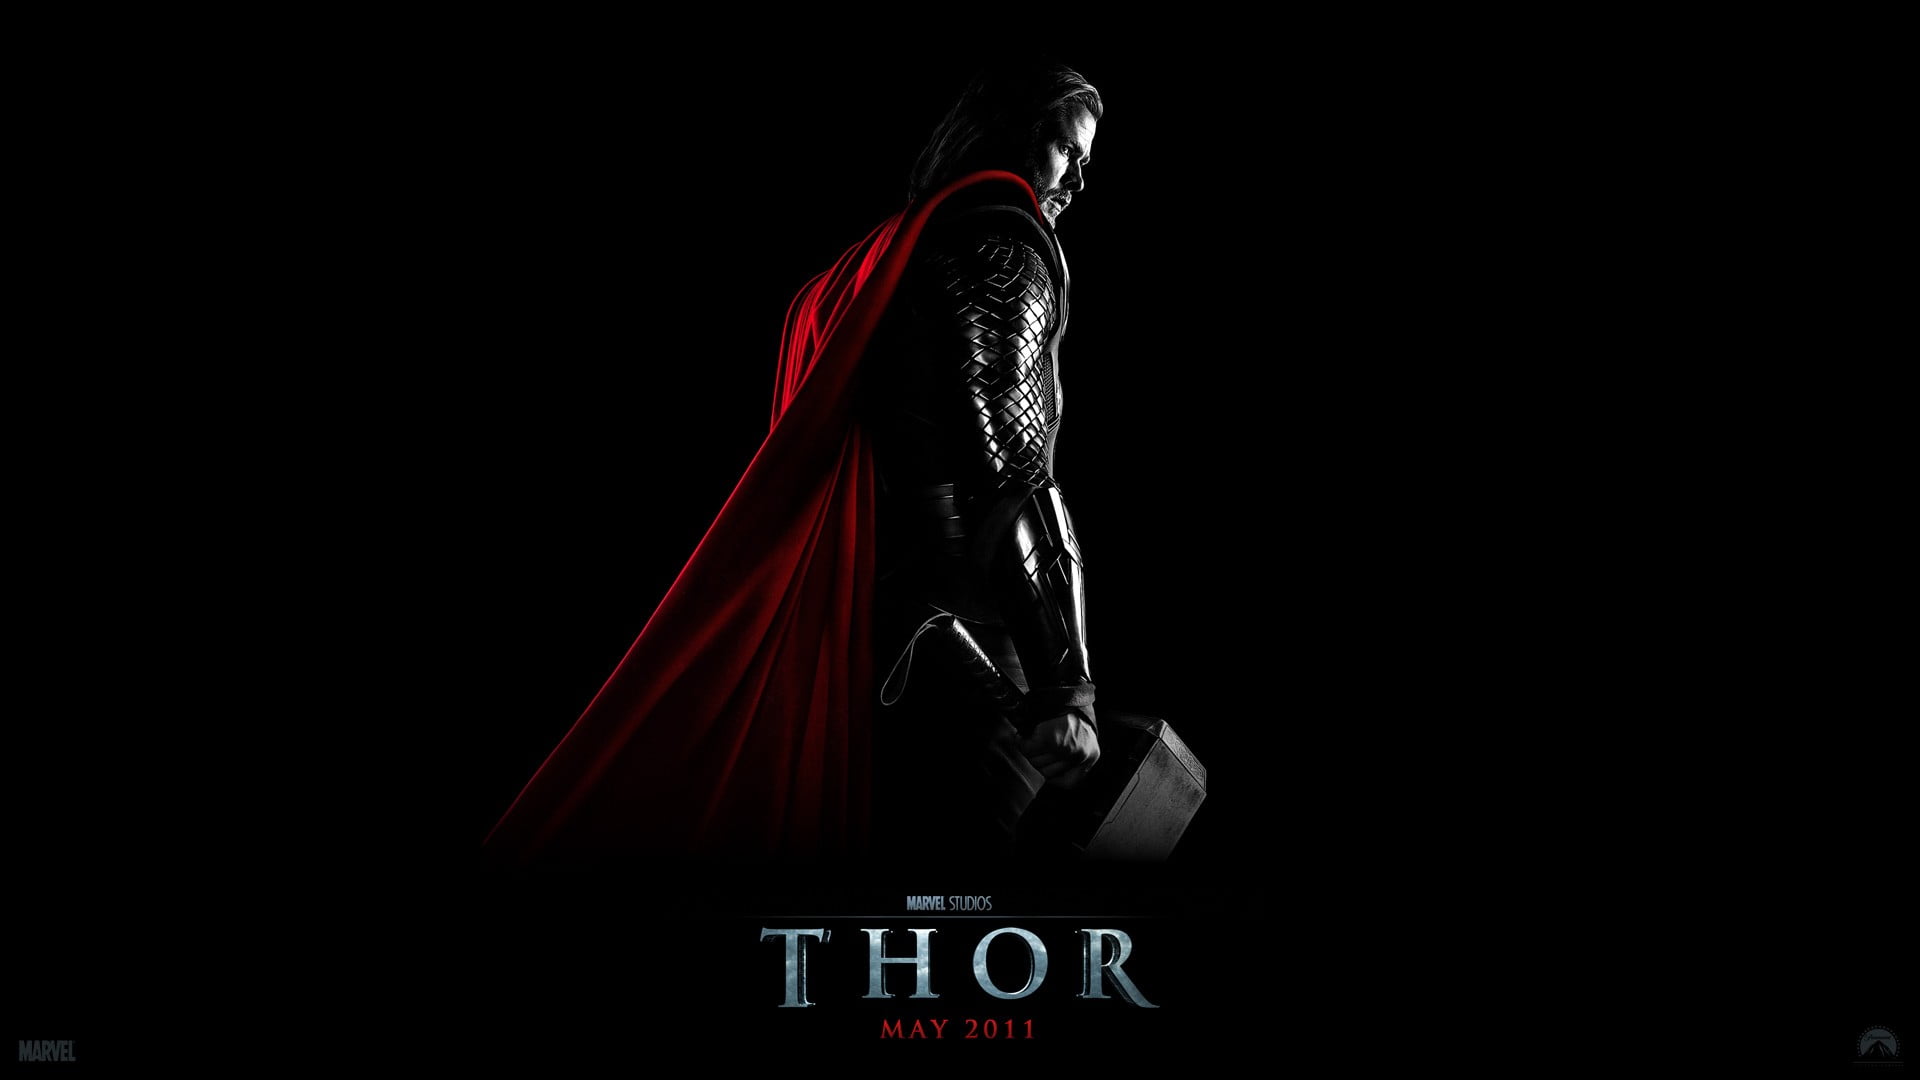 Thor digital wallpaper, Thor, Chris Hemsworth, movies, black background